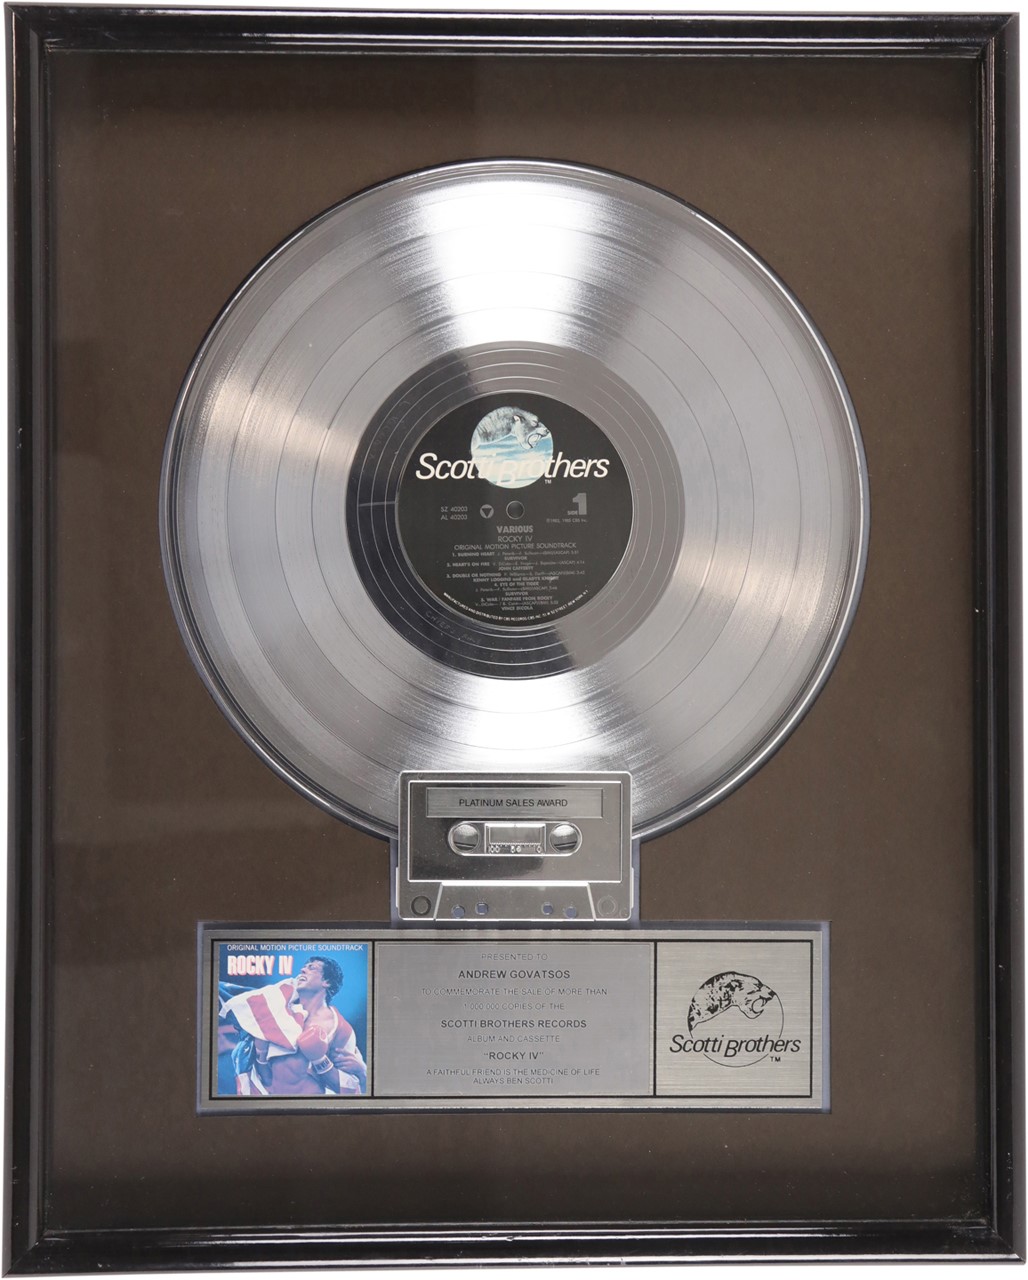 - Rocky IV Platinum Record Award